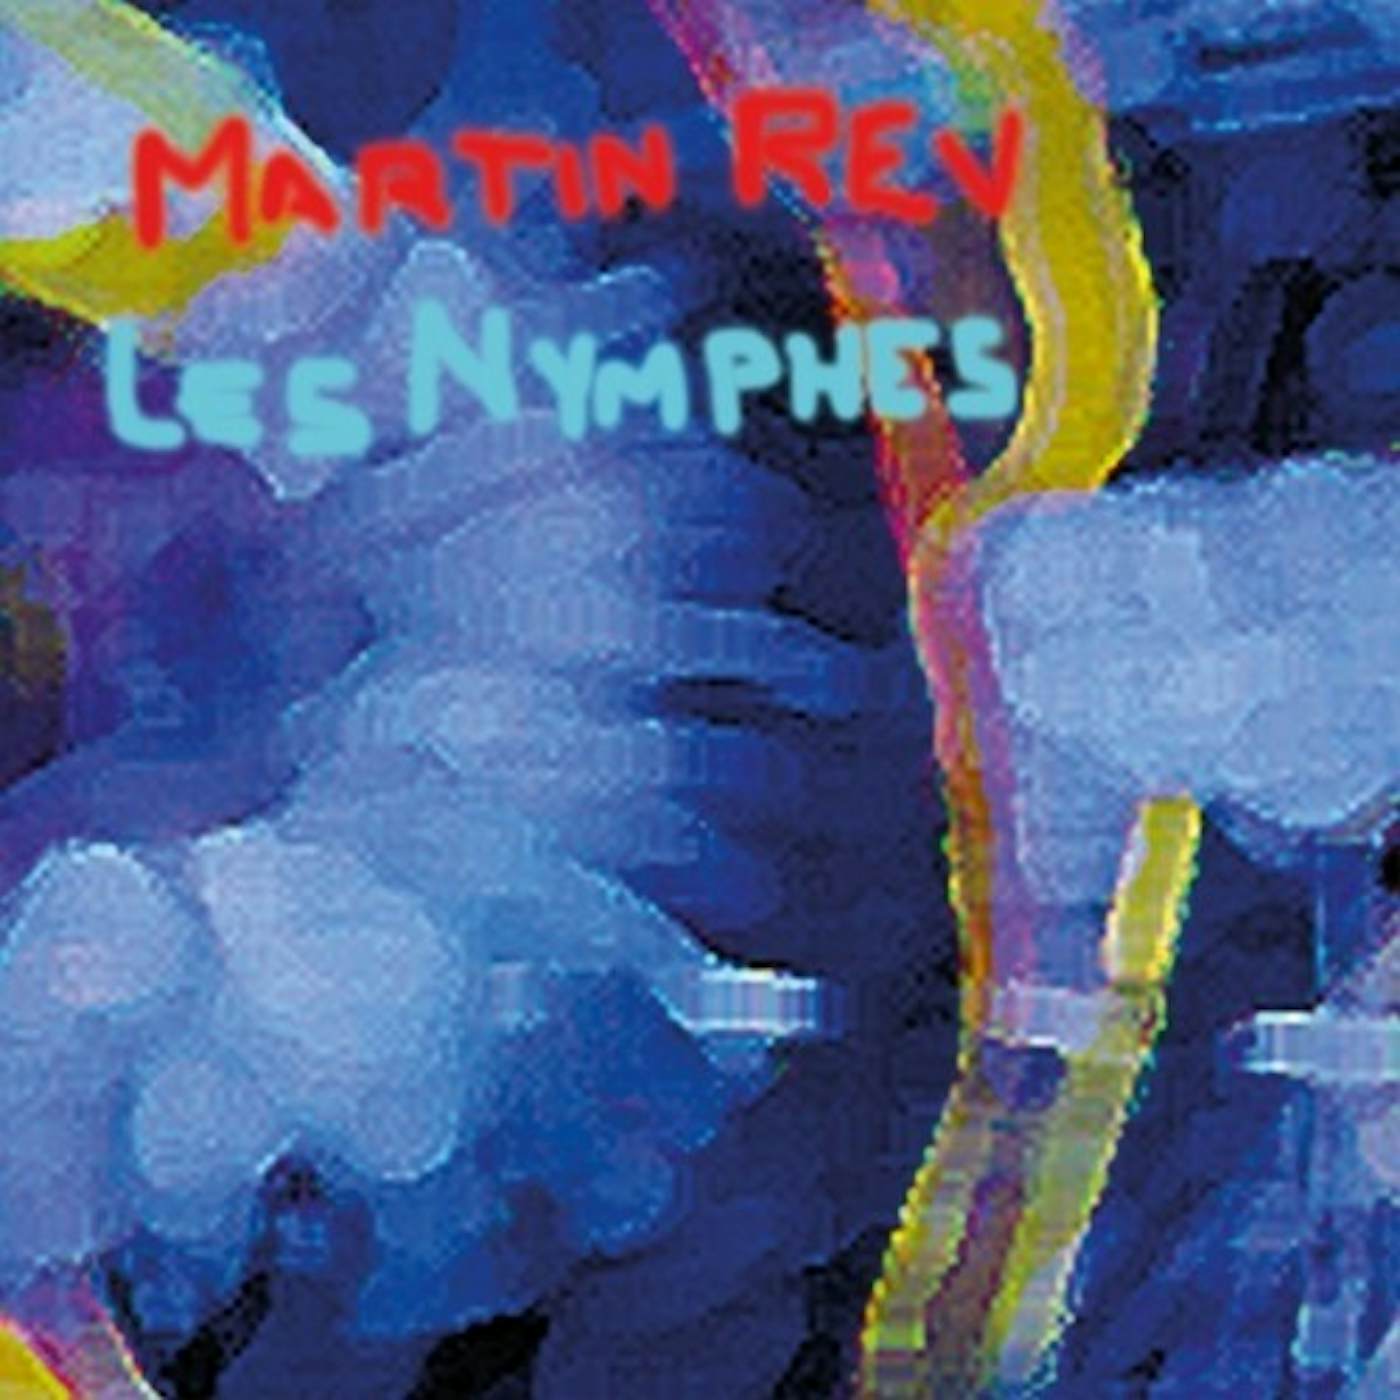 Martin Rev LES NYMPHES CD